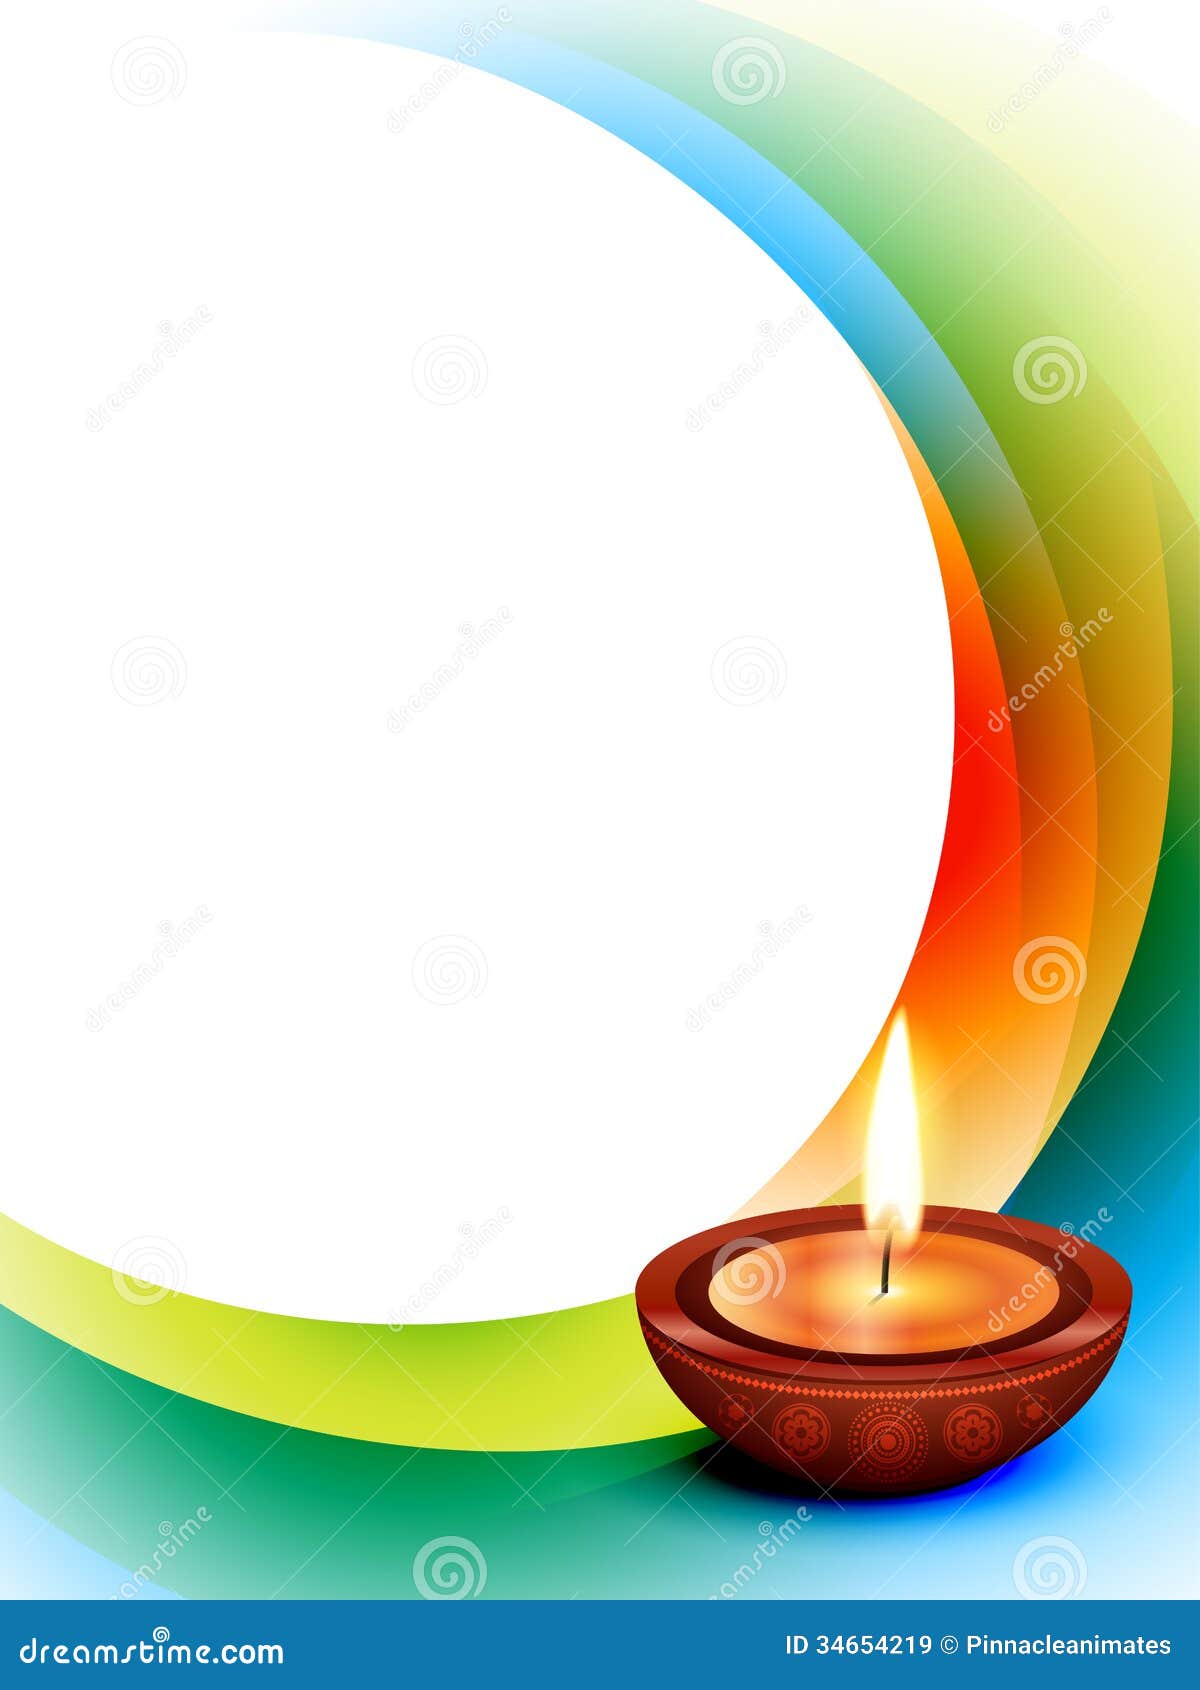 diwali clipart free download - photo #41